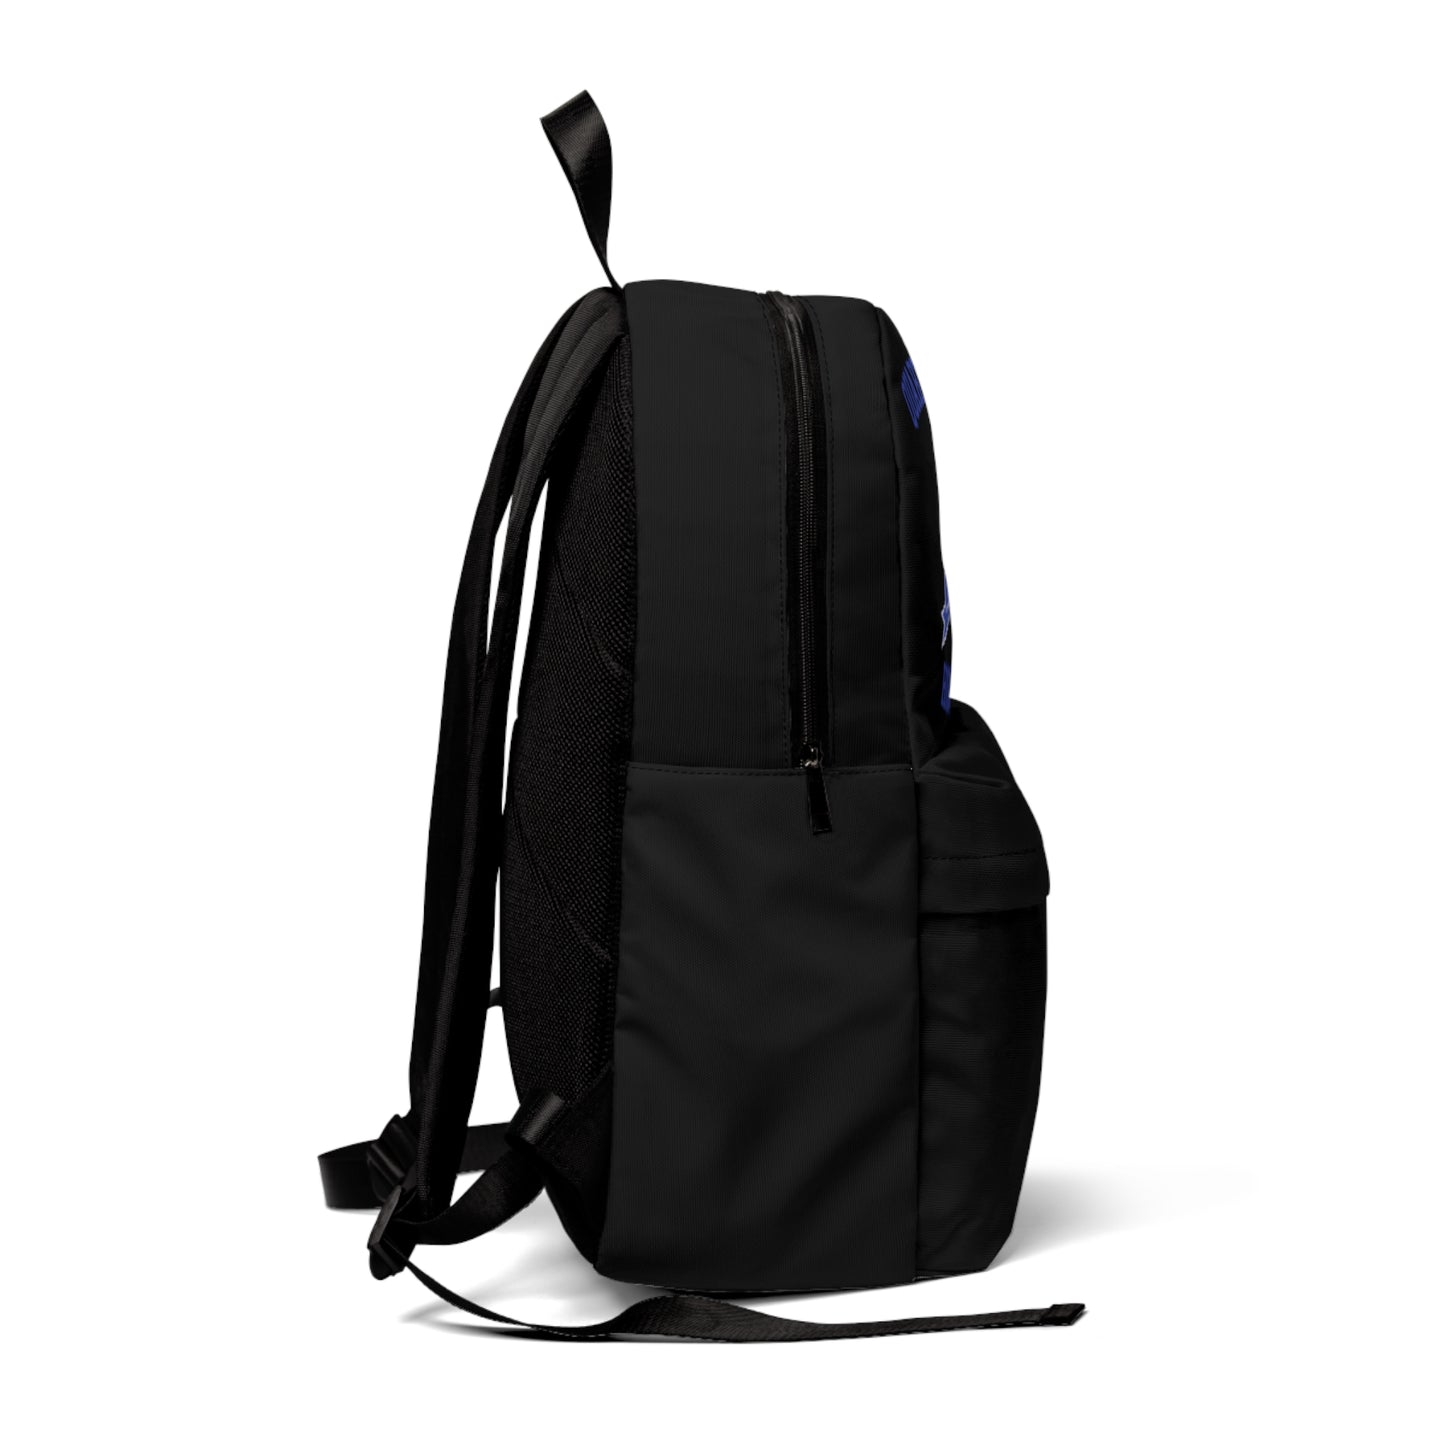 QuarterBrick High School Unisex Classic Backpack